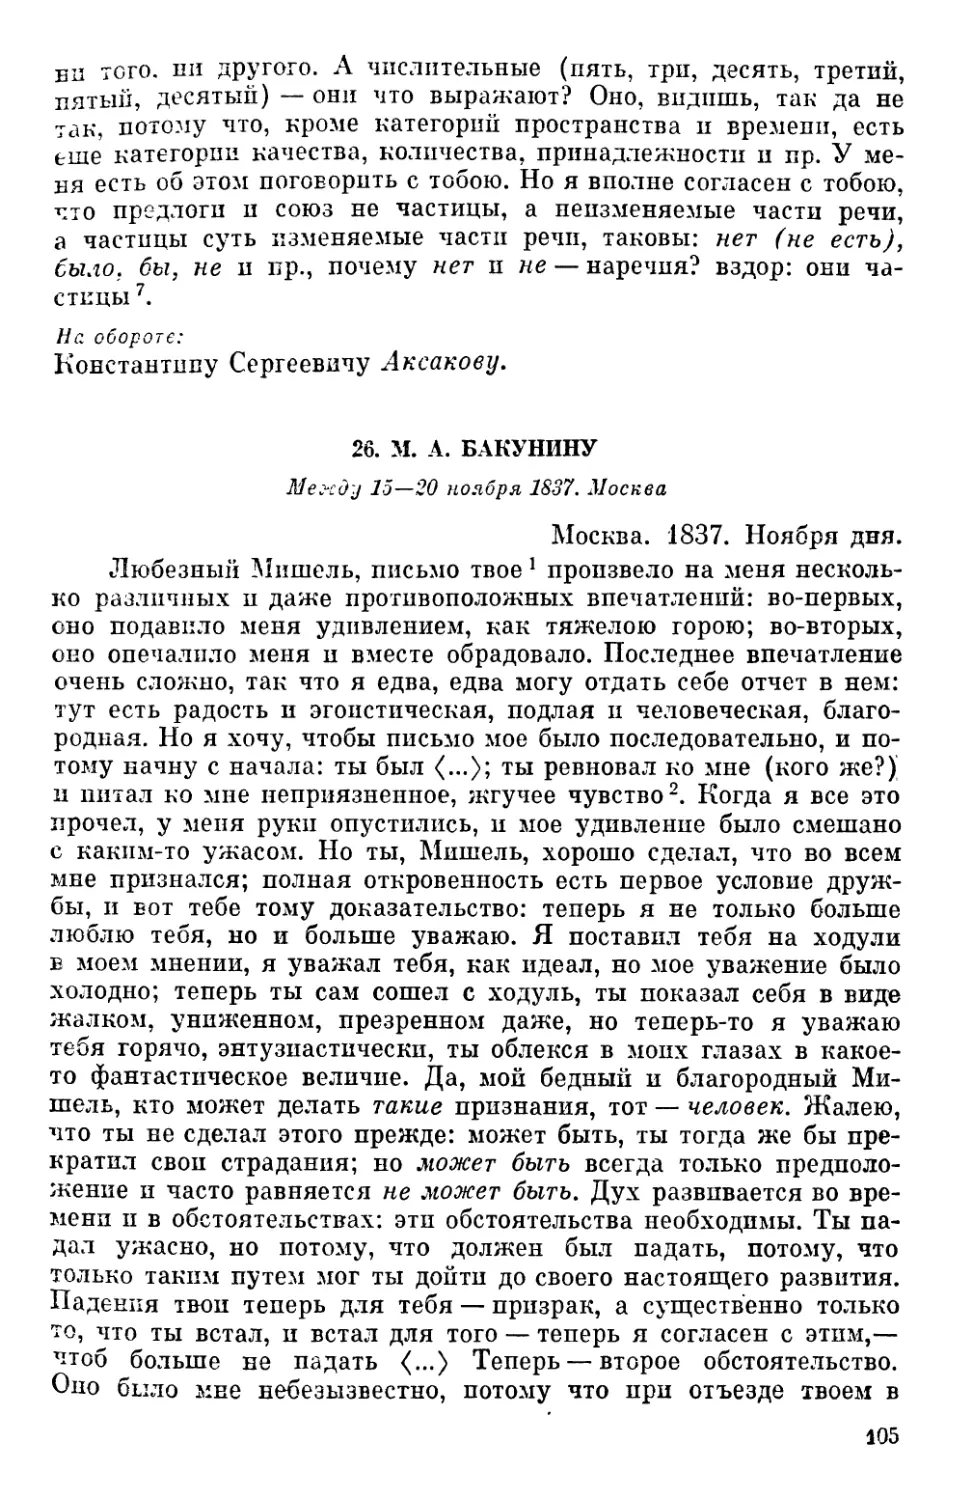 26. М. А. Бакунину. Между 15—20 ноября1837